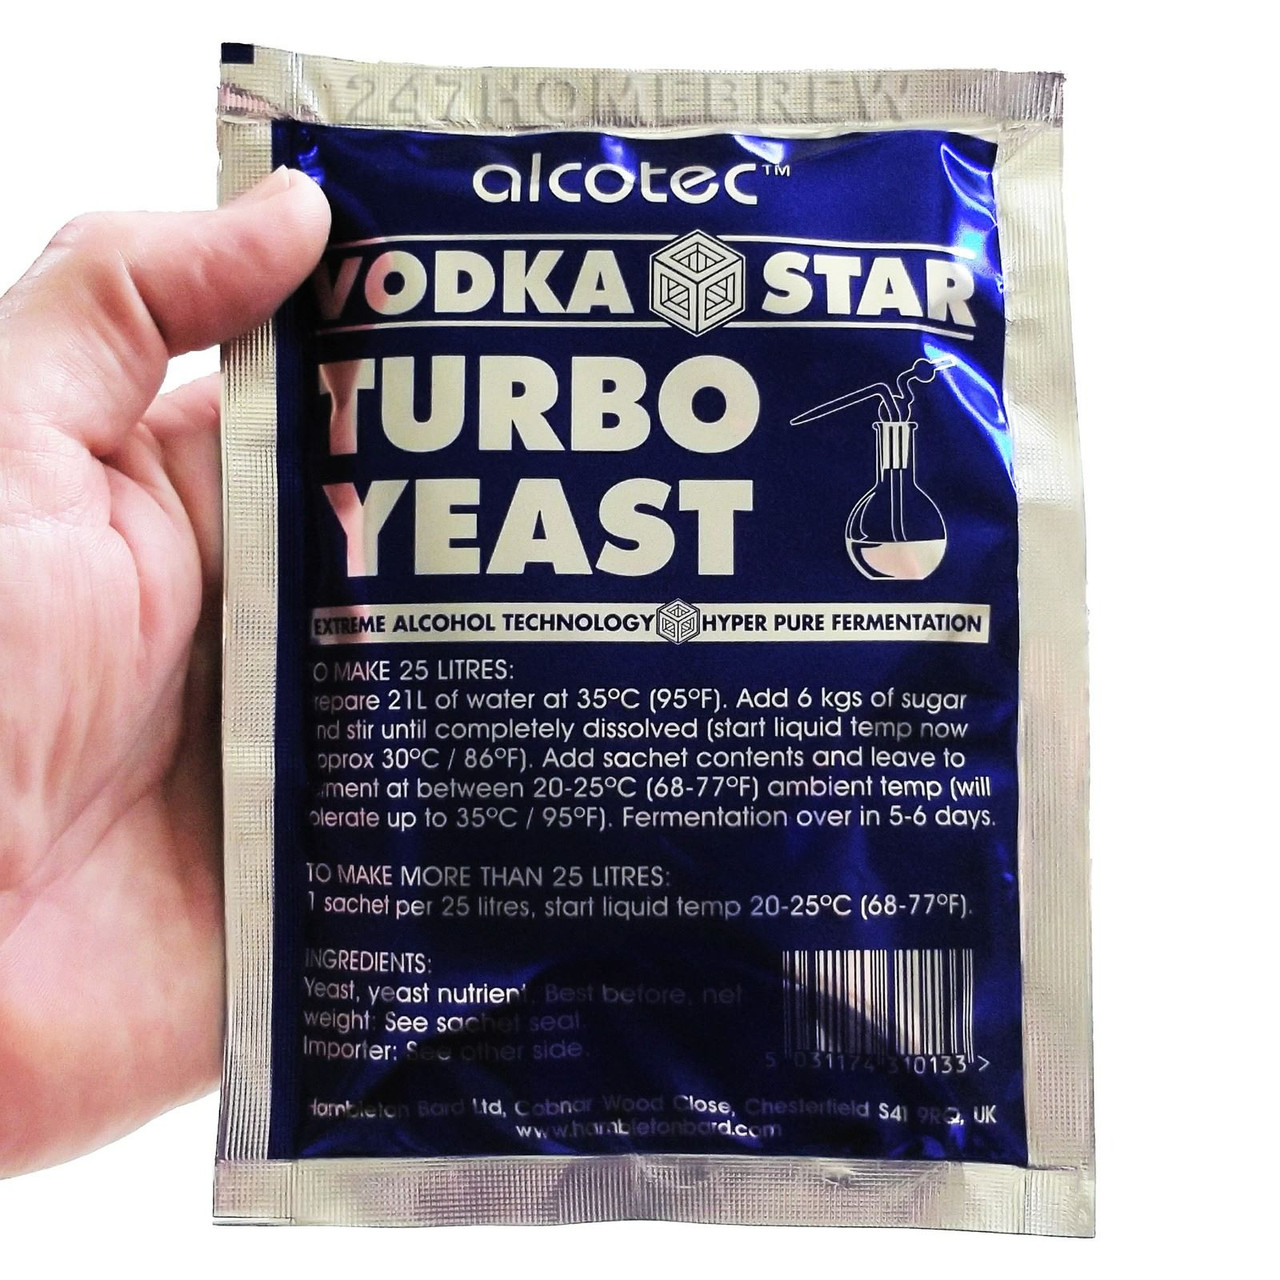 Alcotec Vodka Star Turbo Yeast